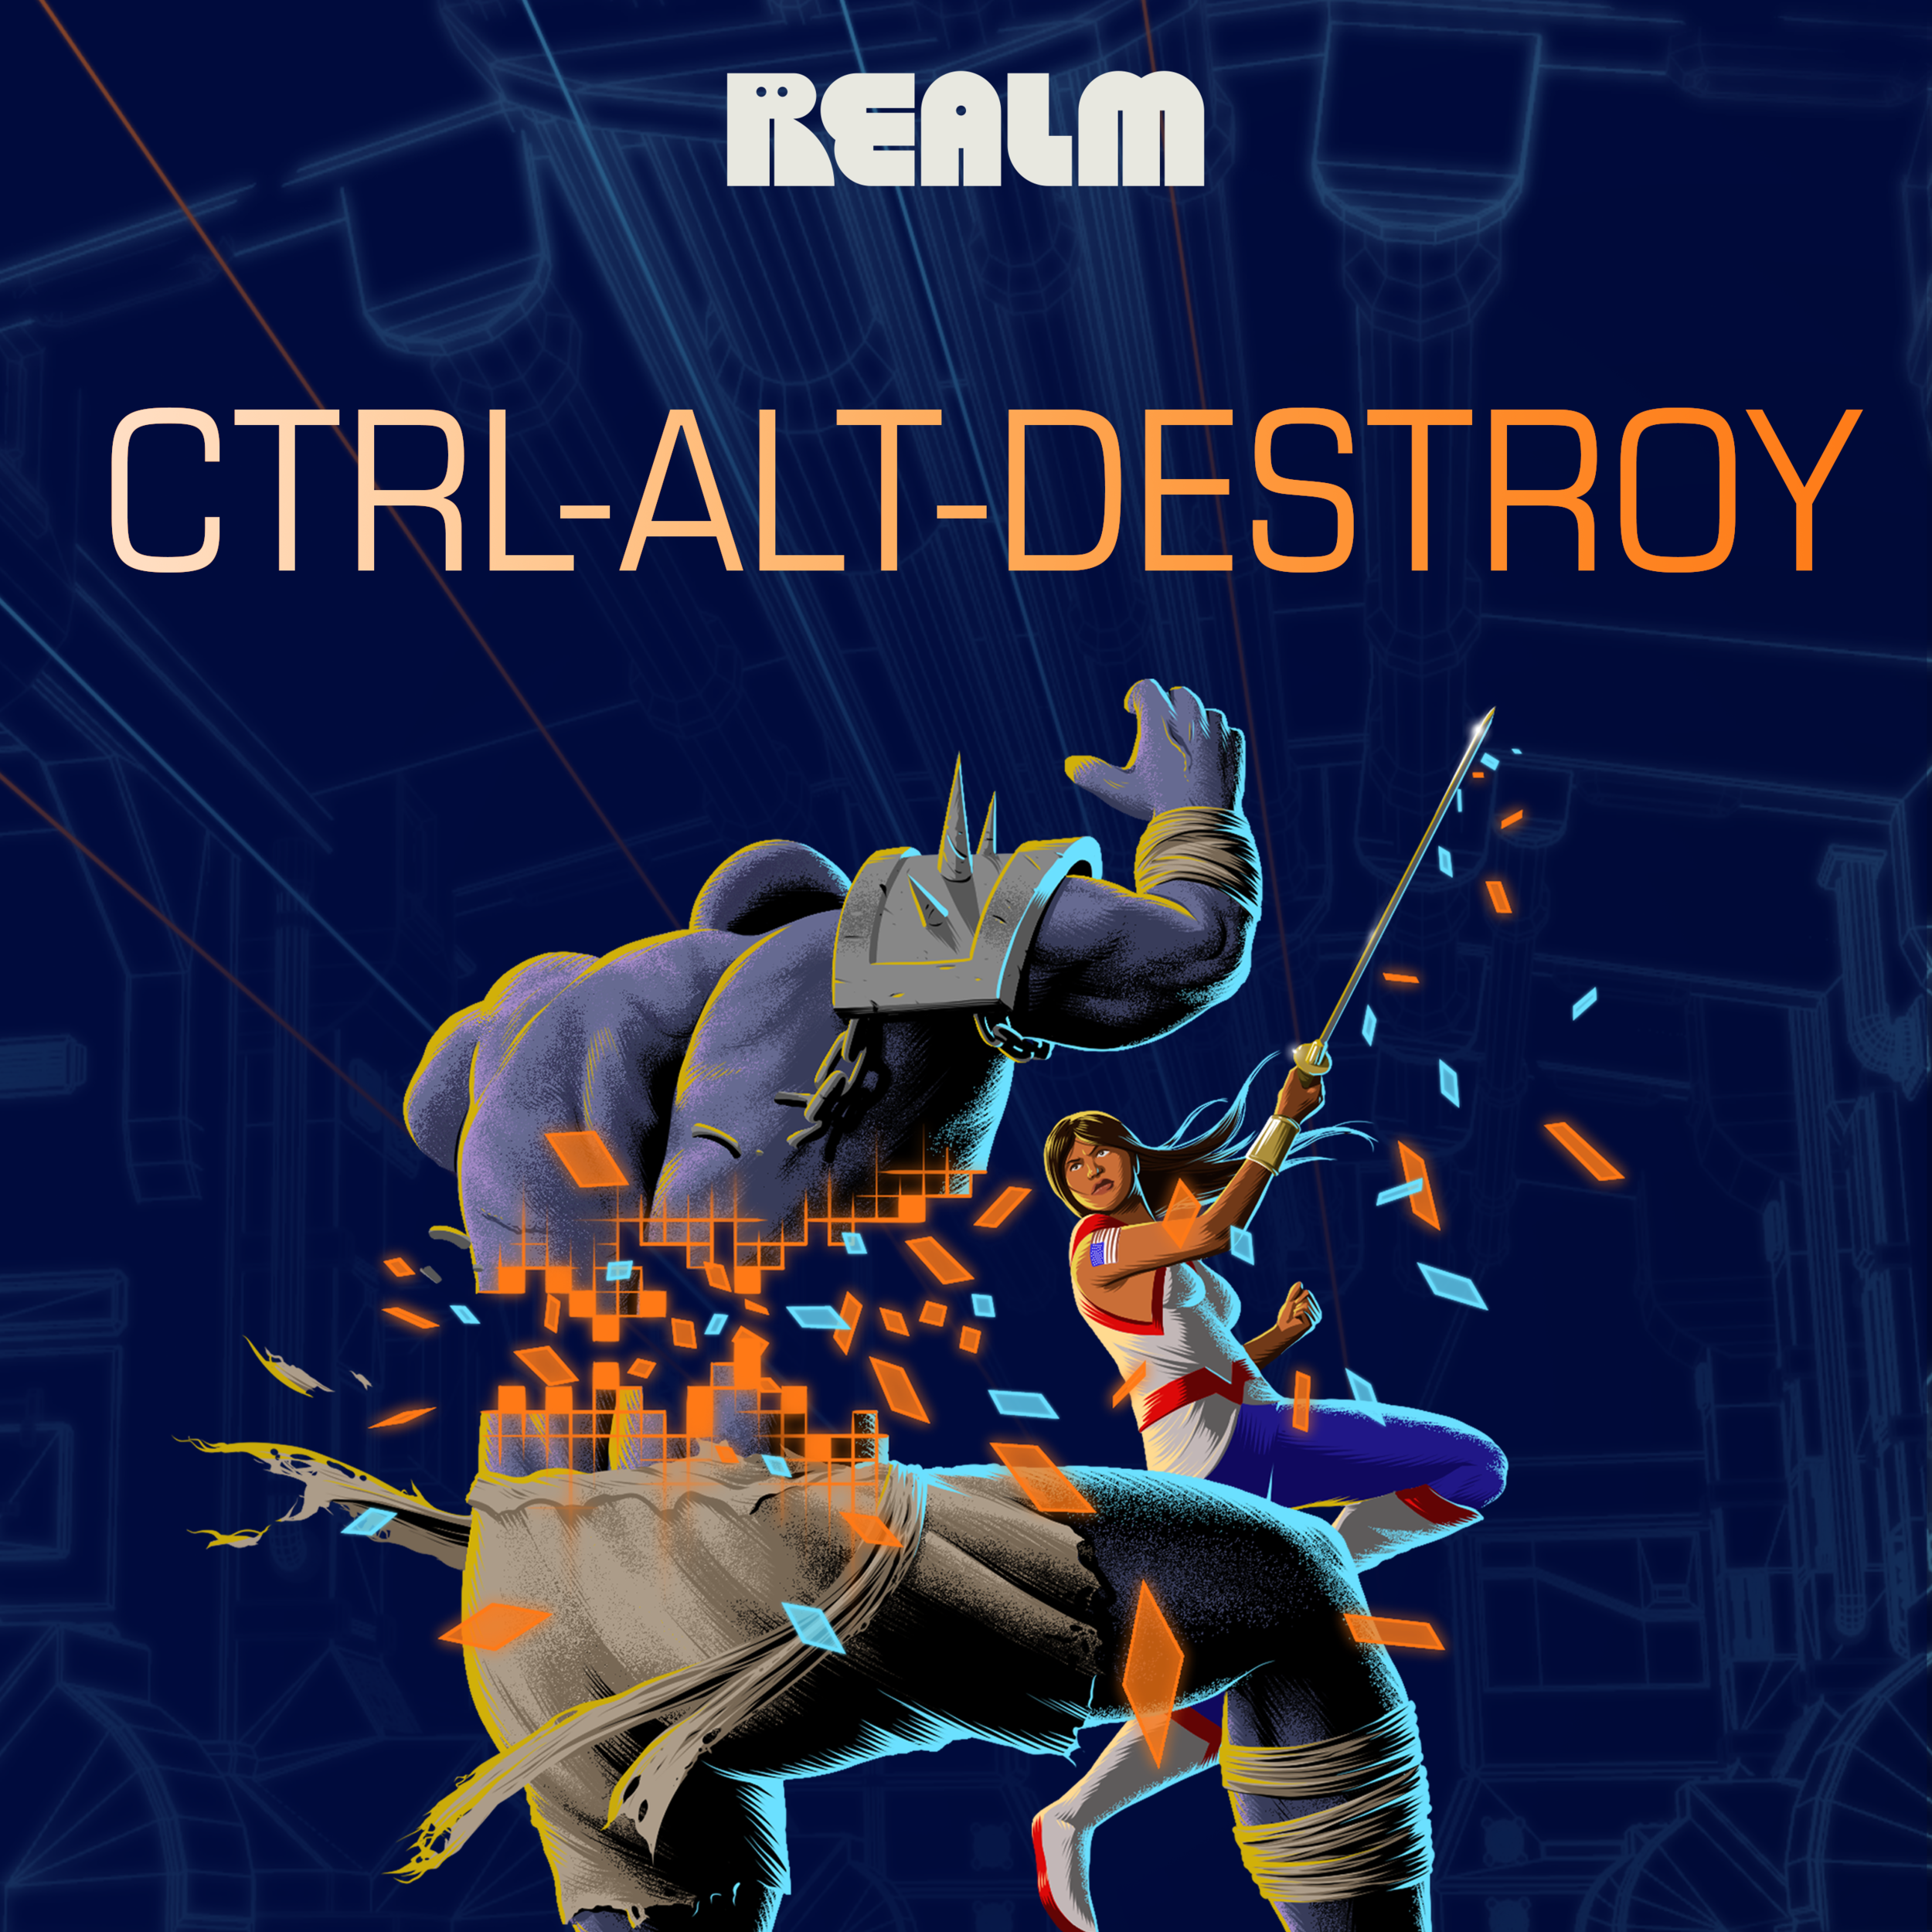 realm_logo_ctrl-alt-destroy copy.png